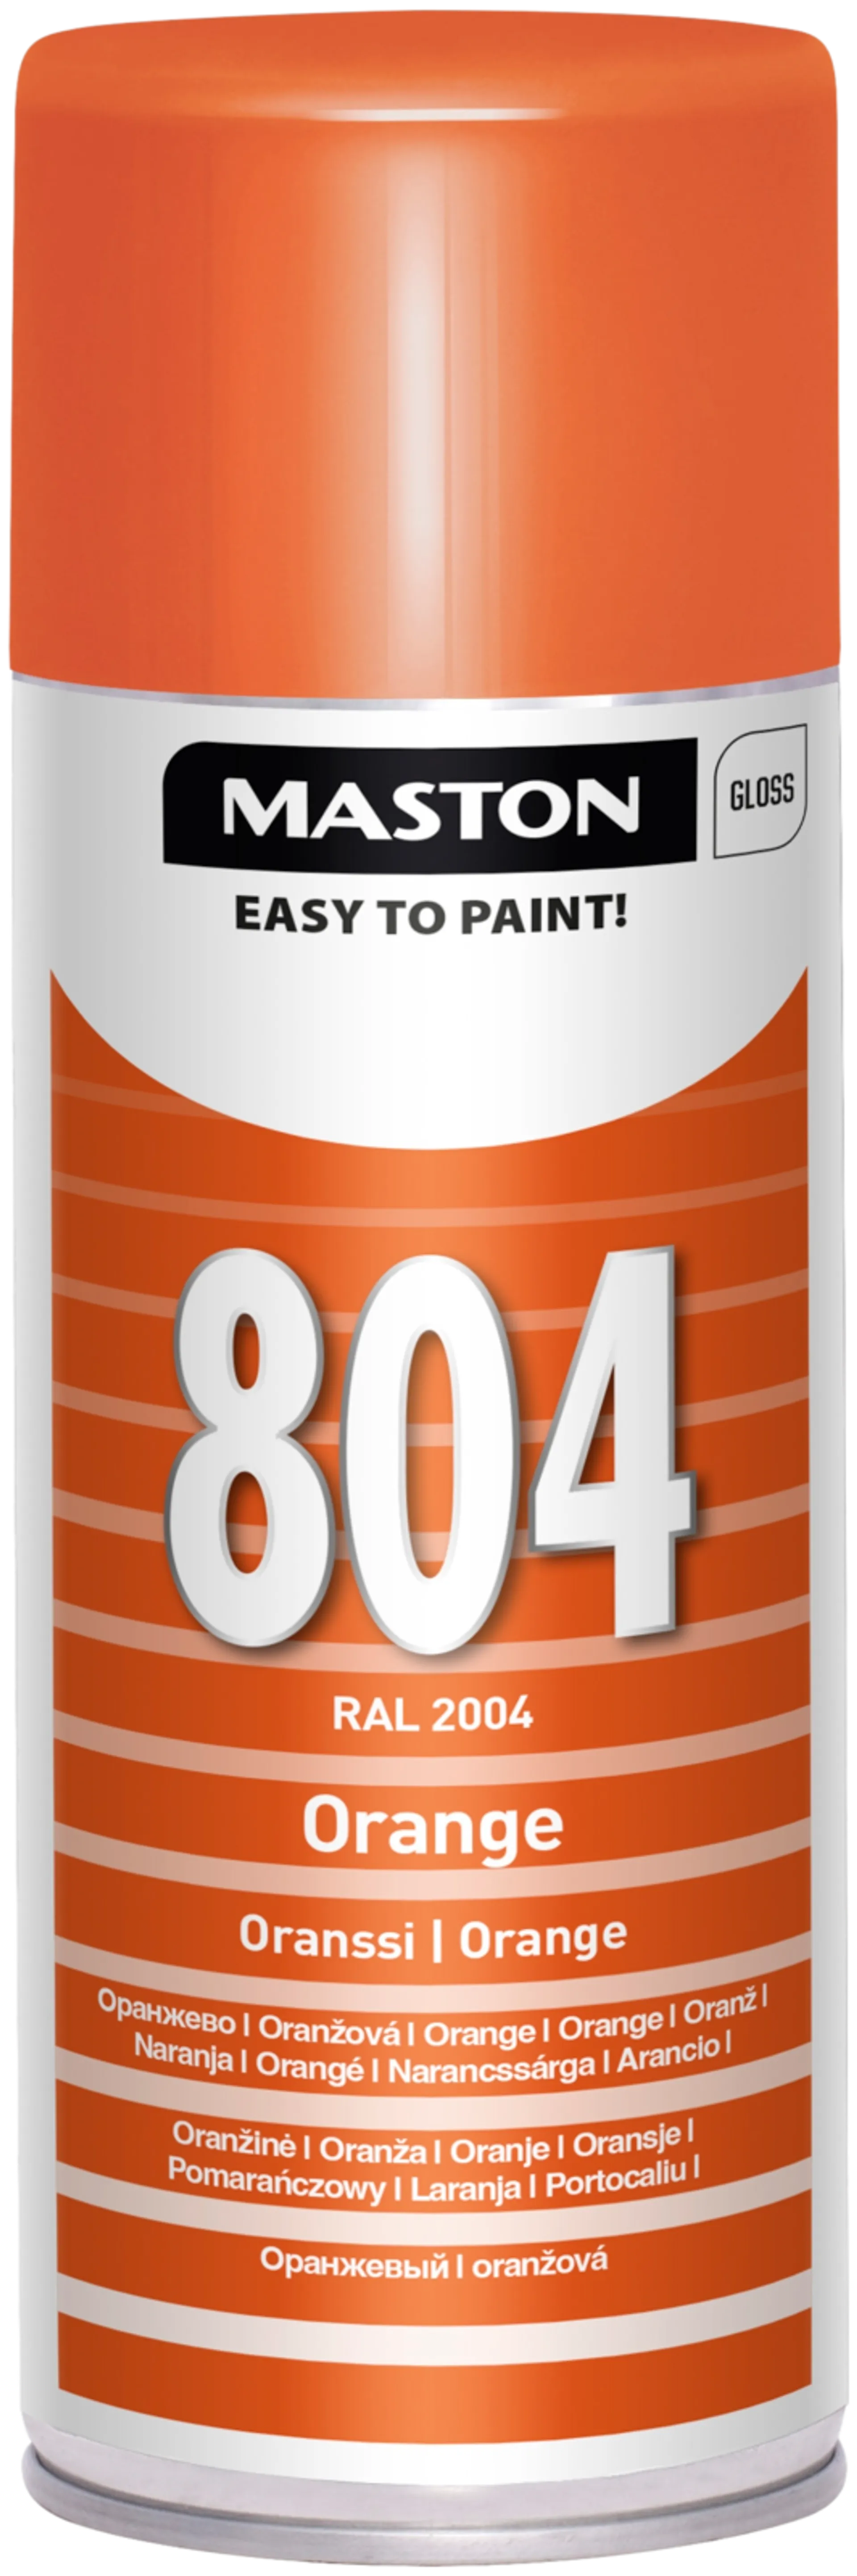 Maston spraymaali oranssi 804 400ml RAL 2004